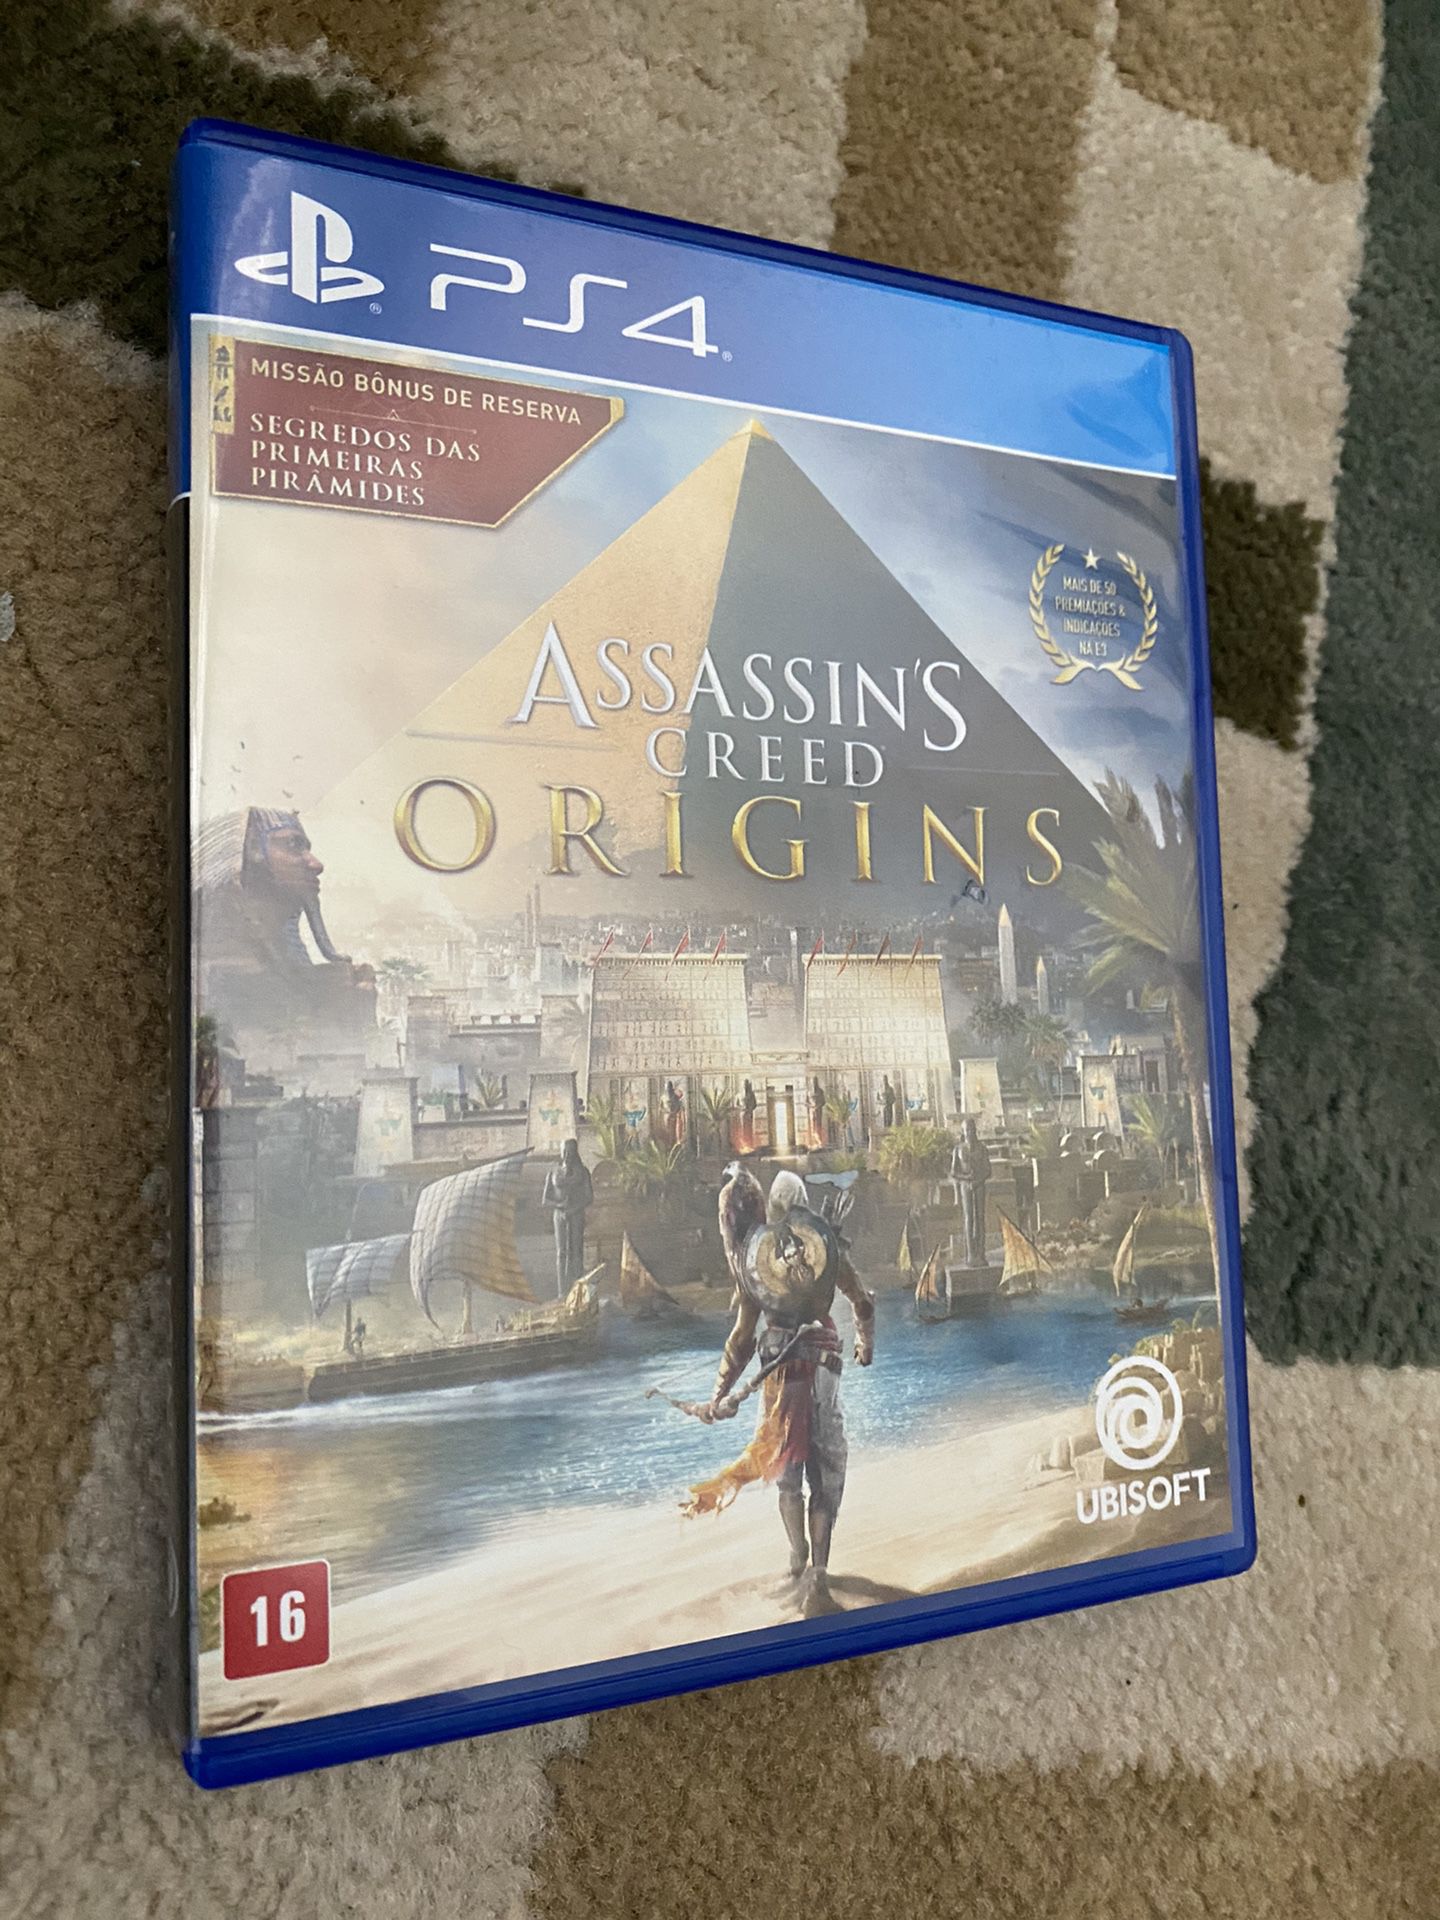 Assassins Creed Origins for PS4